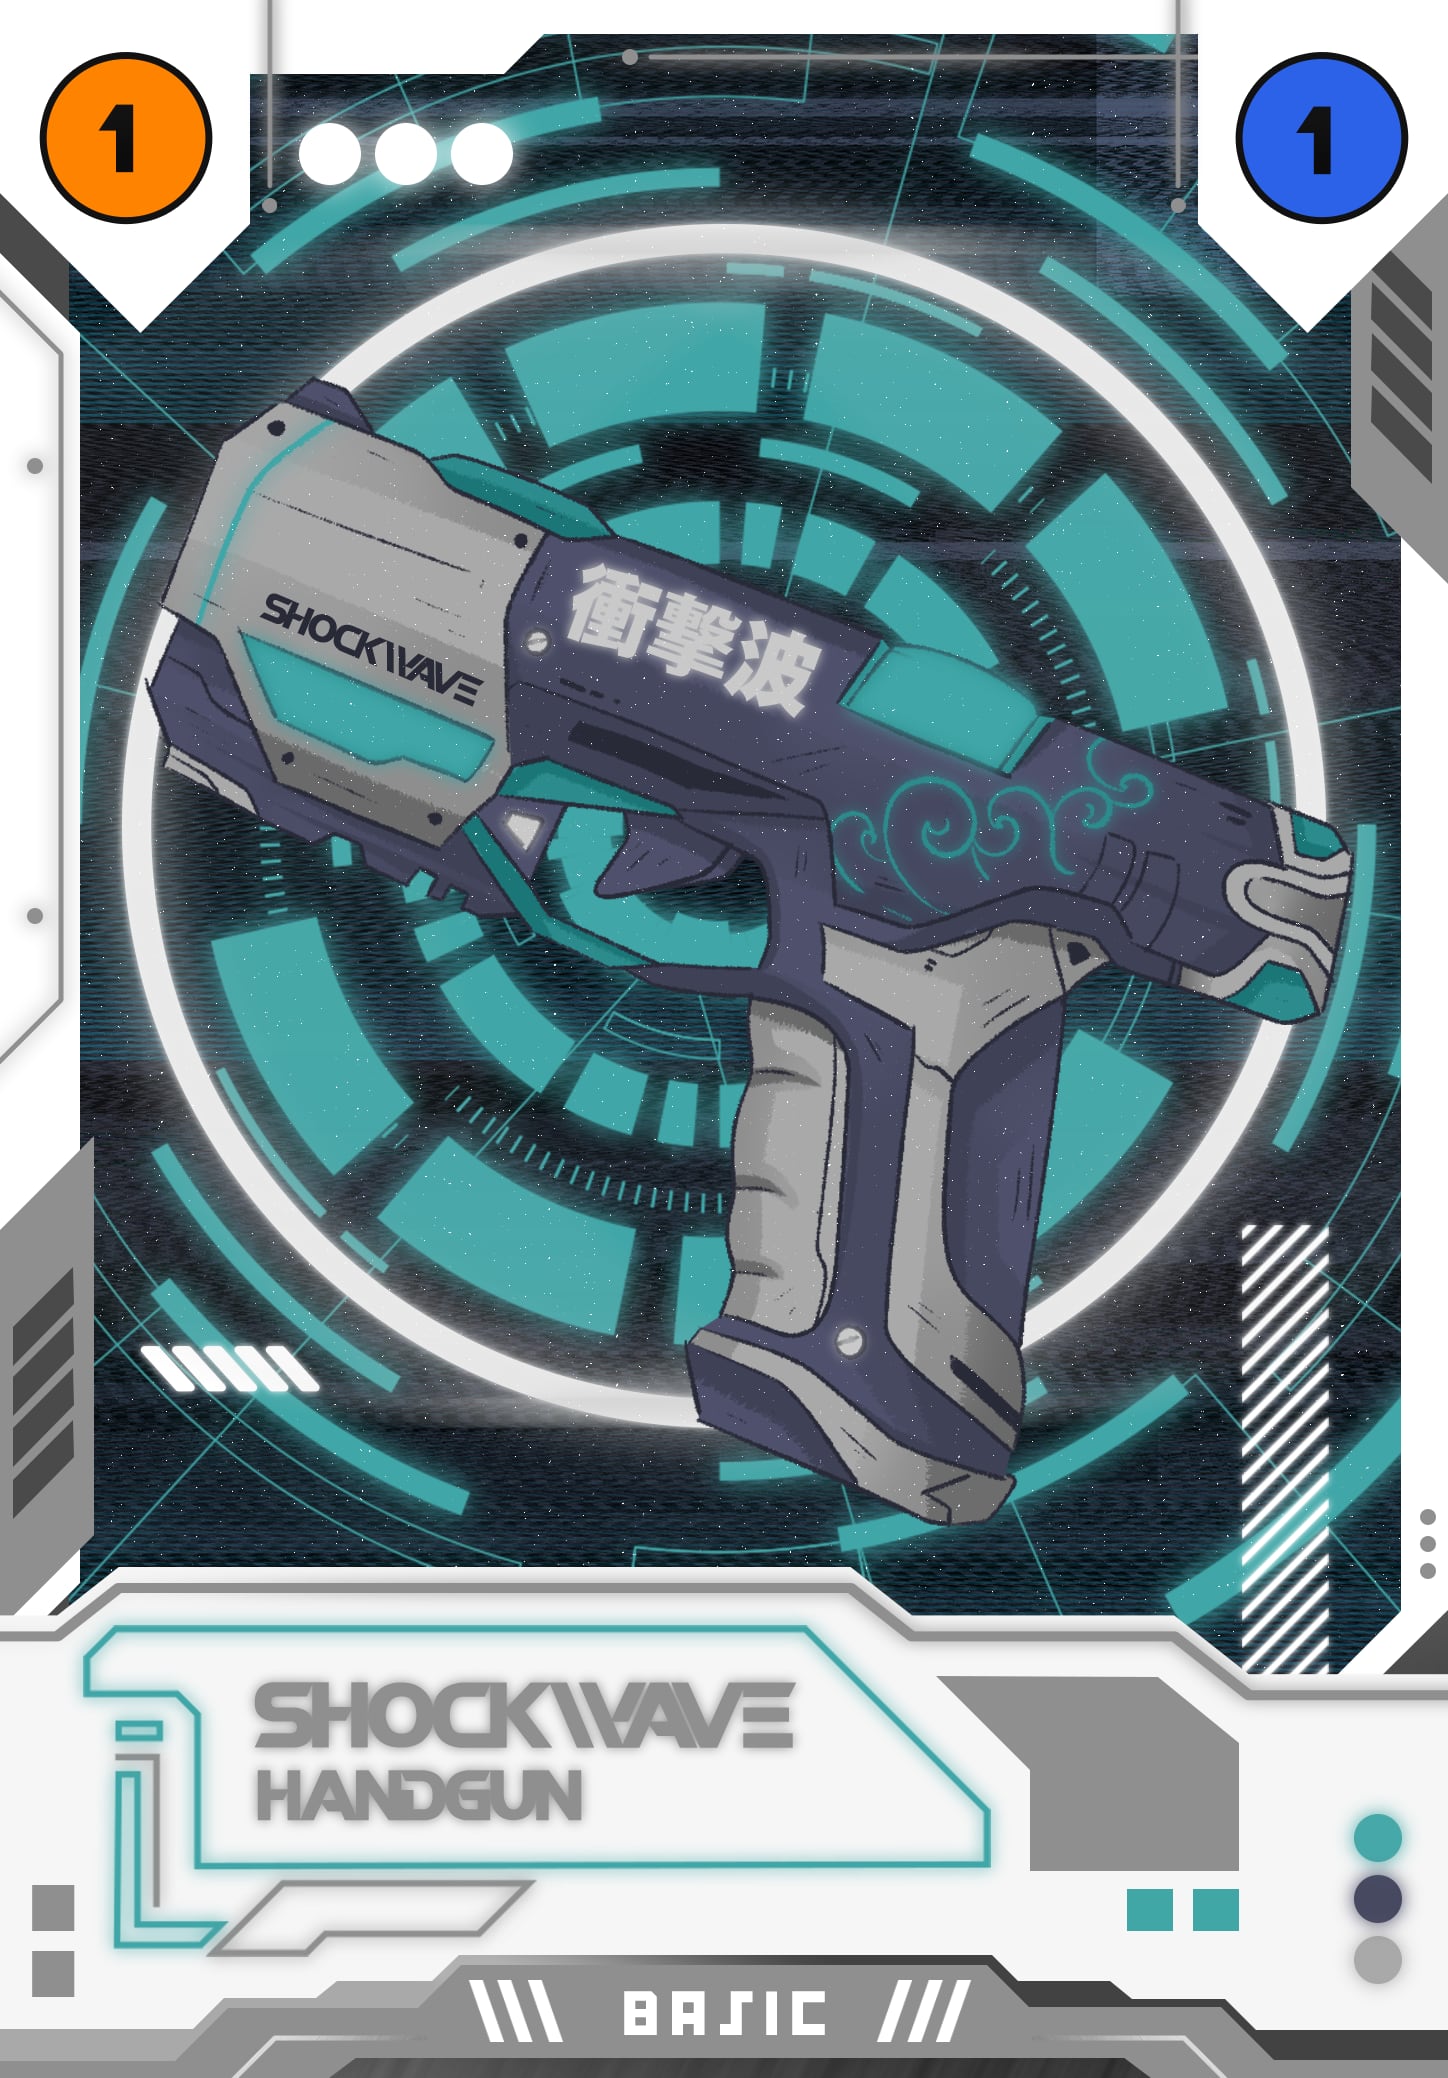 Shockwave Handgun